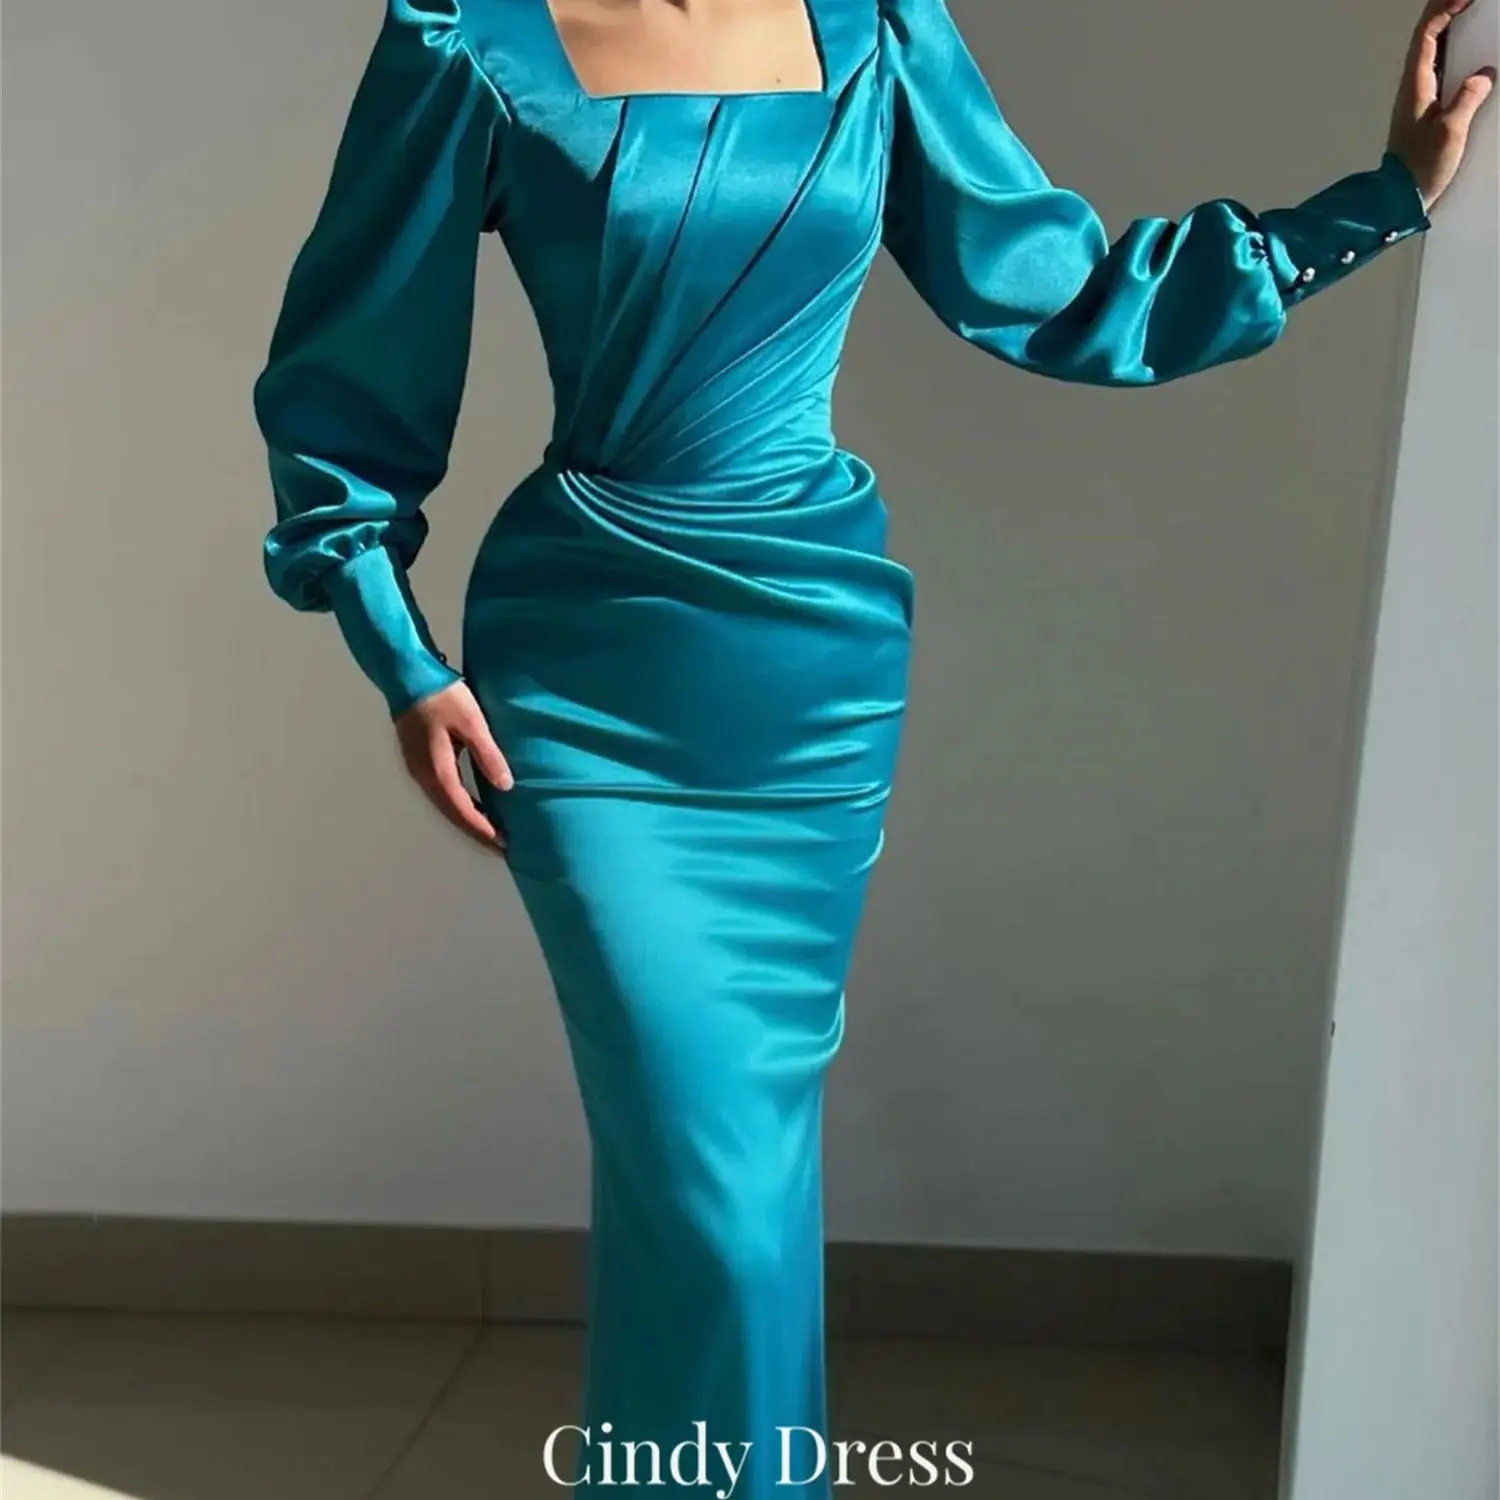 

Cindy Satin Mermaid Long Sleeves Detachable Tail Woman's Evening Dress Elegant and Pretty Women's Dresses Party Luxury Wedding